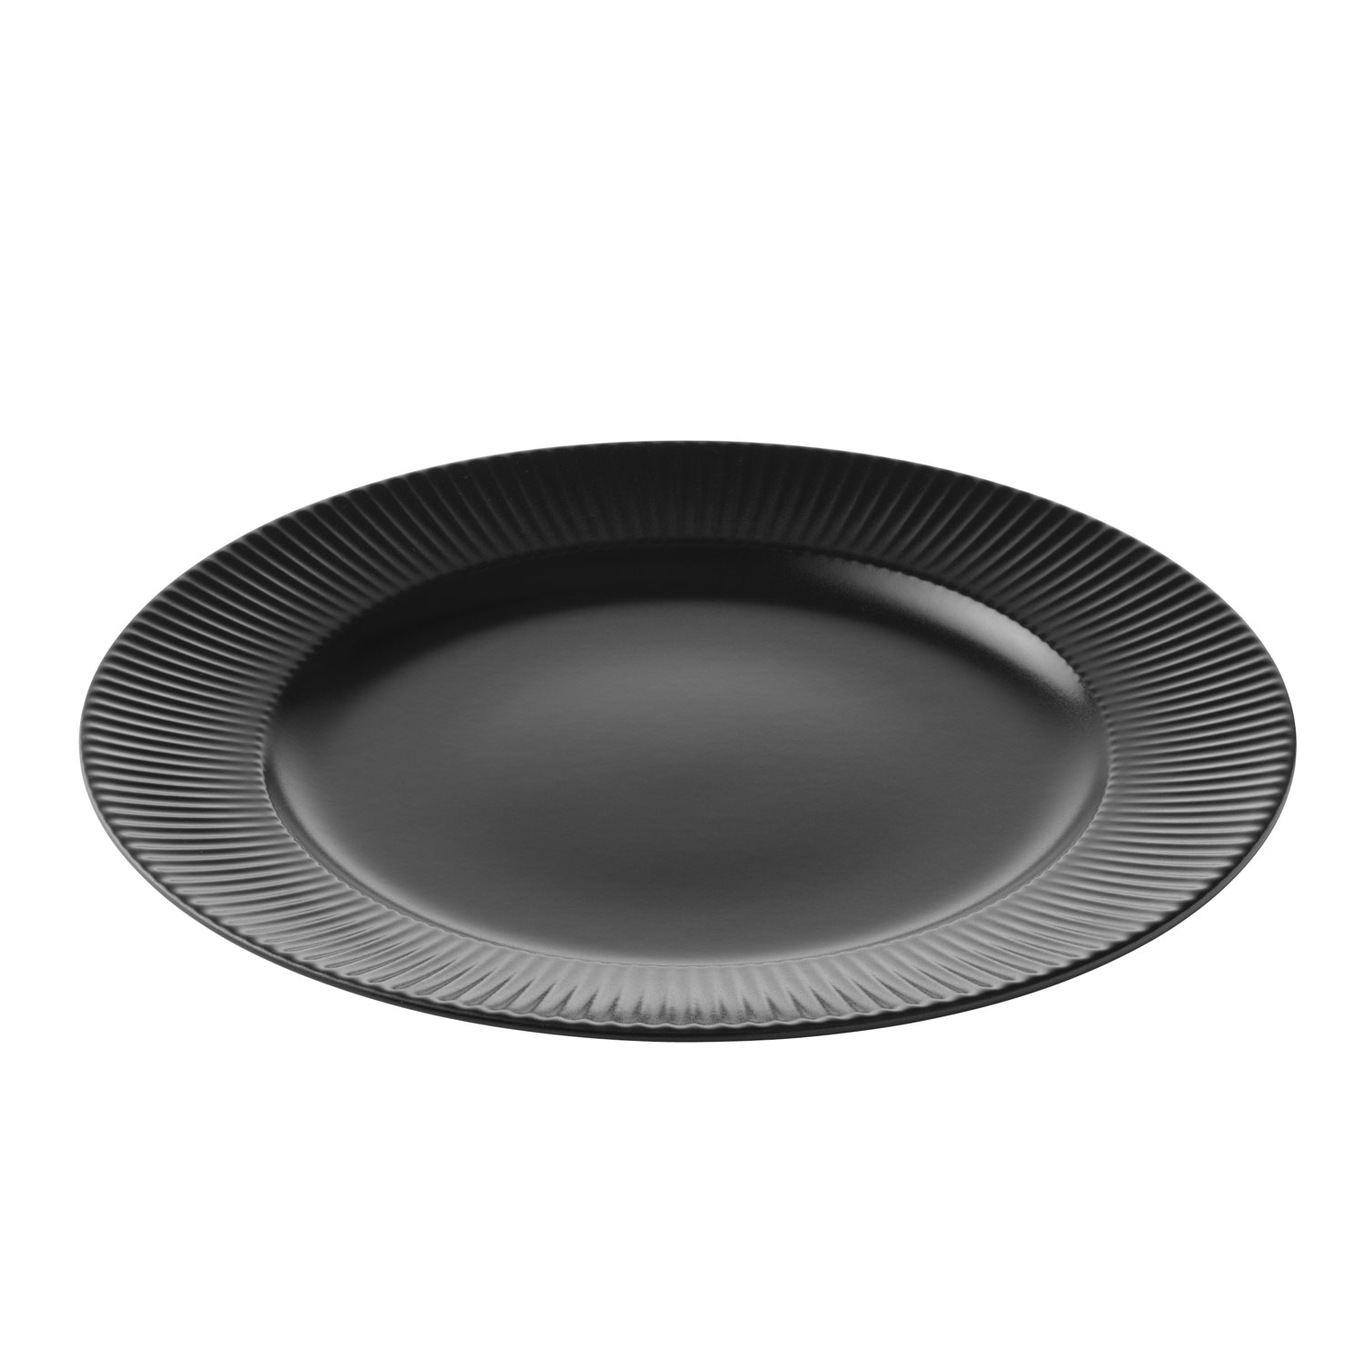 Groovy Dinner Plate 27 cm, Black